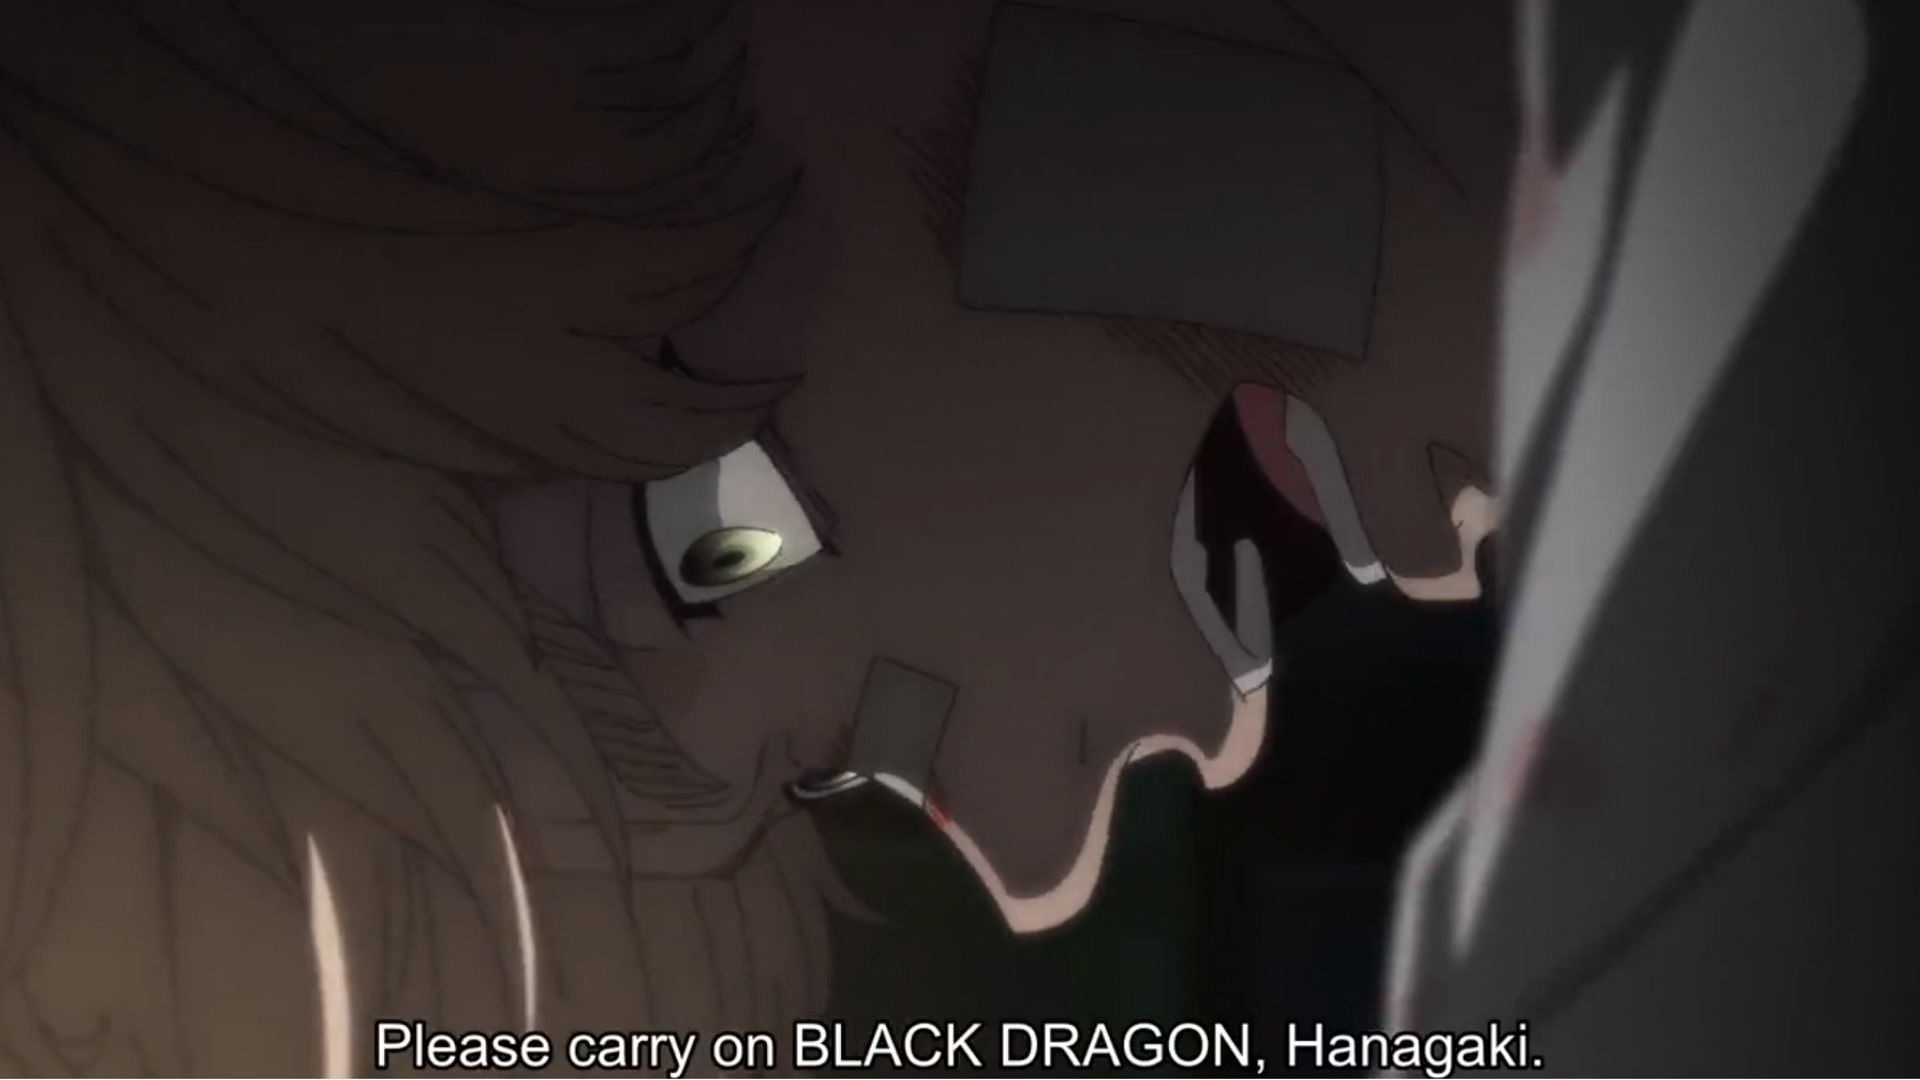 Tokyo Revengers - Tenjiku Arc: Inupi expresses his wish to rebuild Black Dragon (Image via LidenFilms)